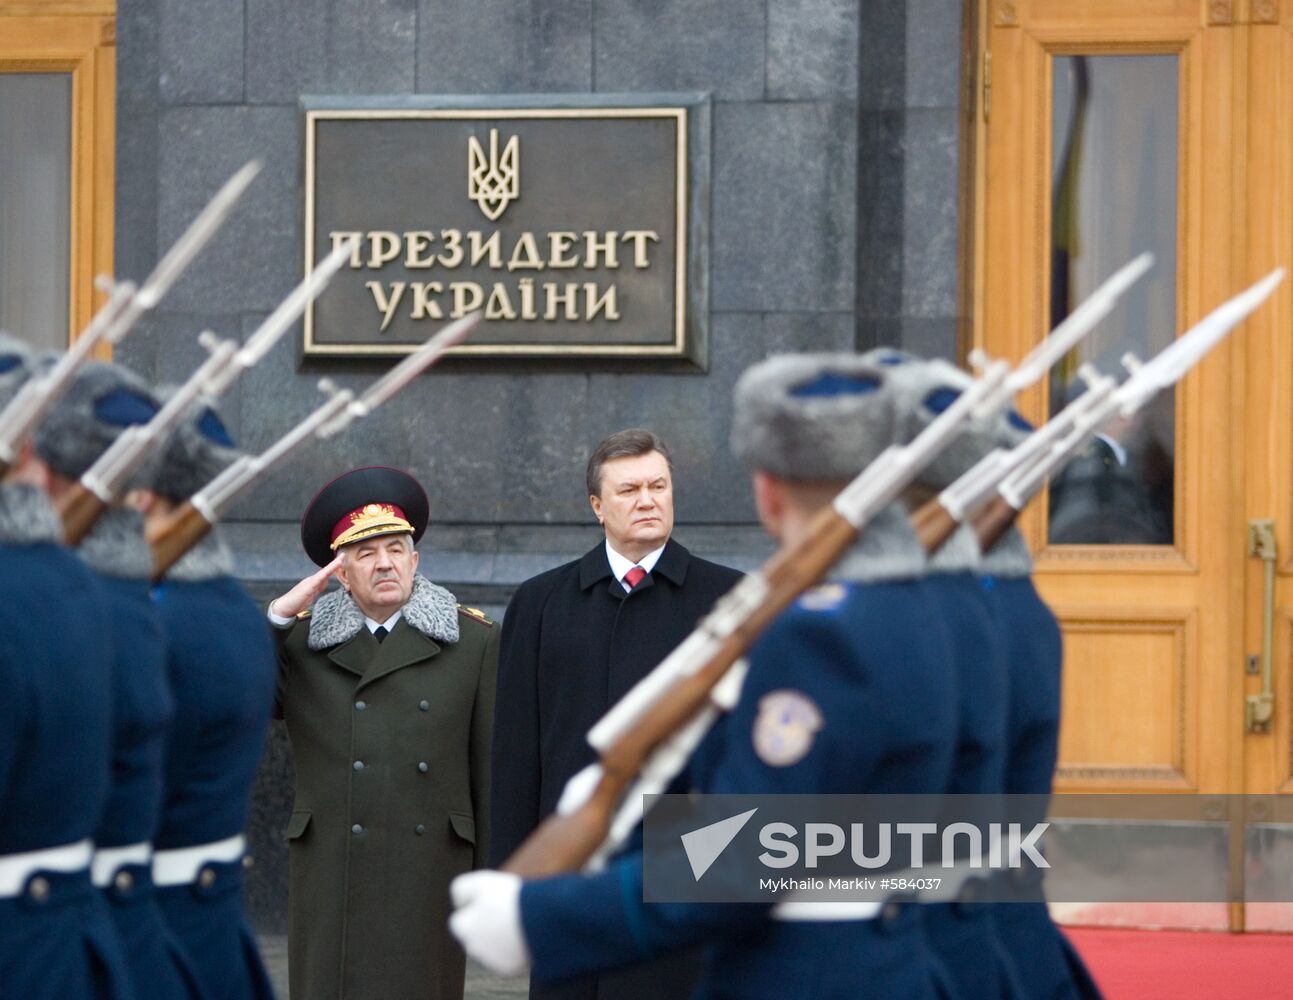 Ivan Svida and Viktor Yanukovych